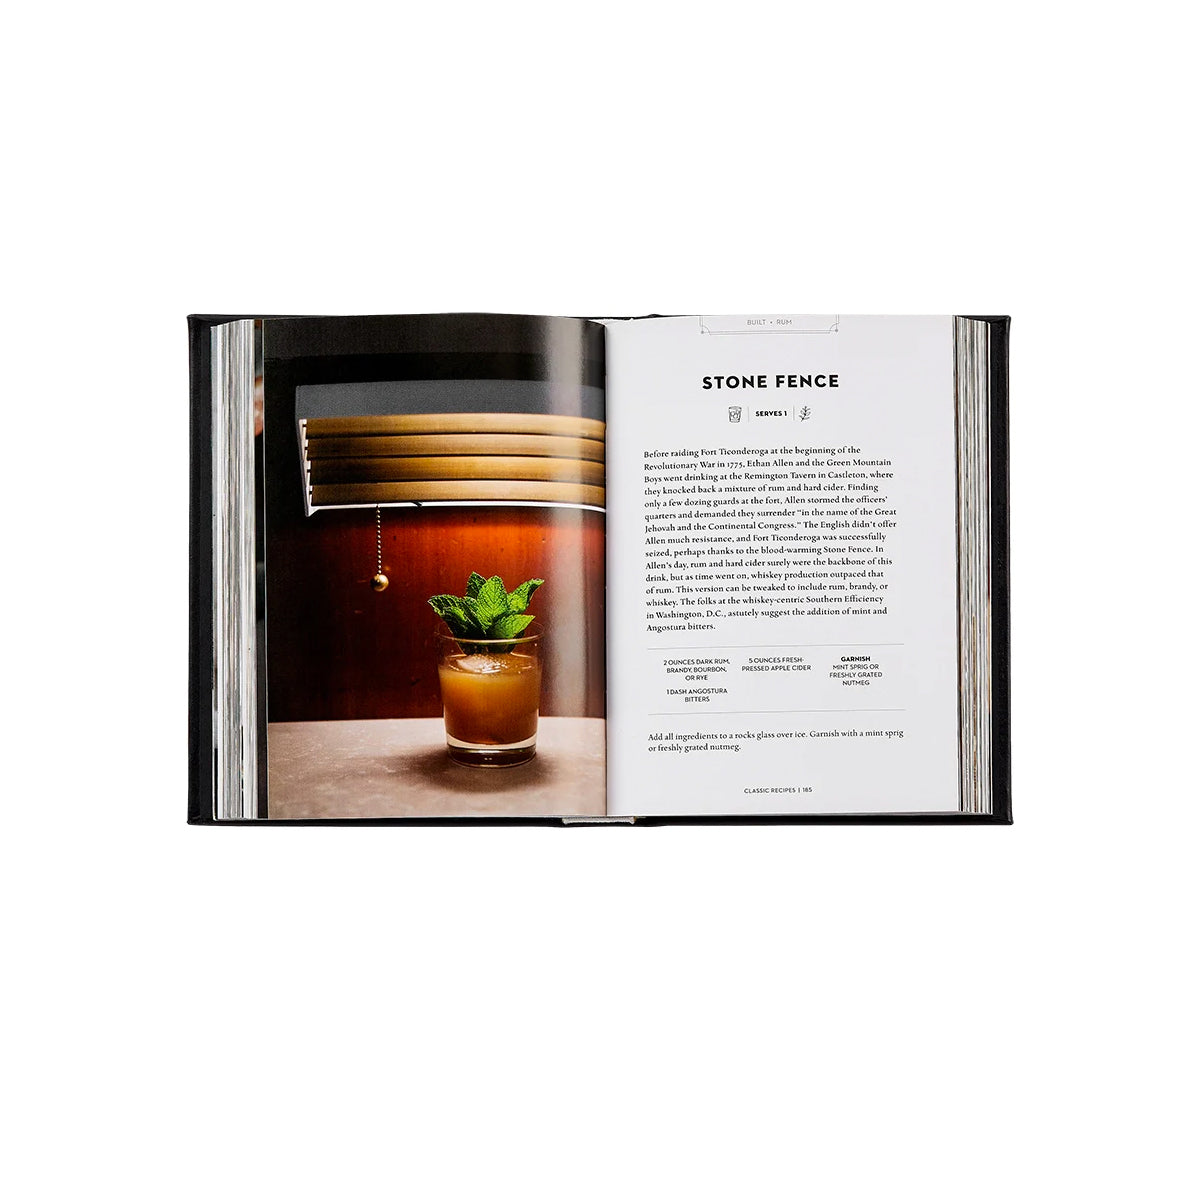 Graphic Image - Essential Cocktail Book